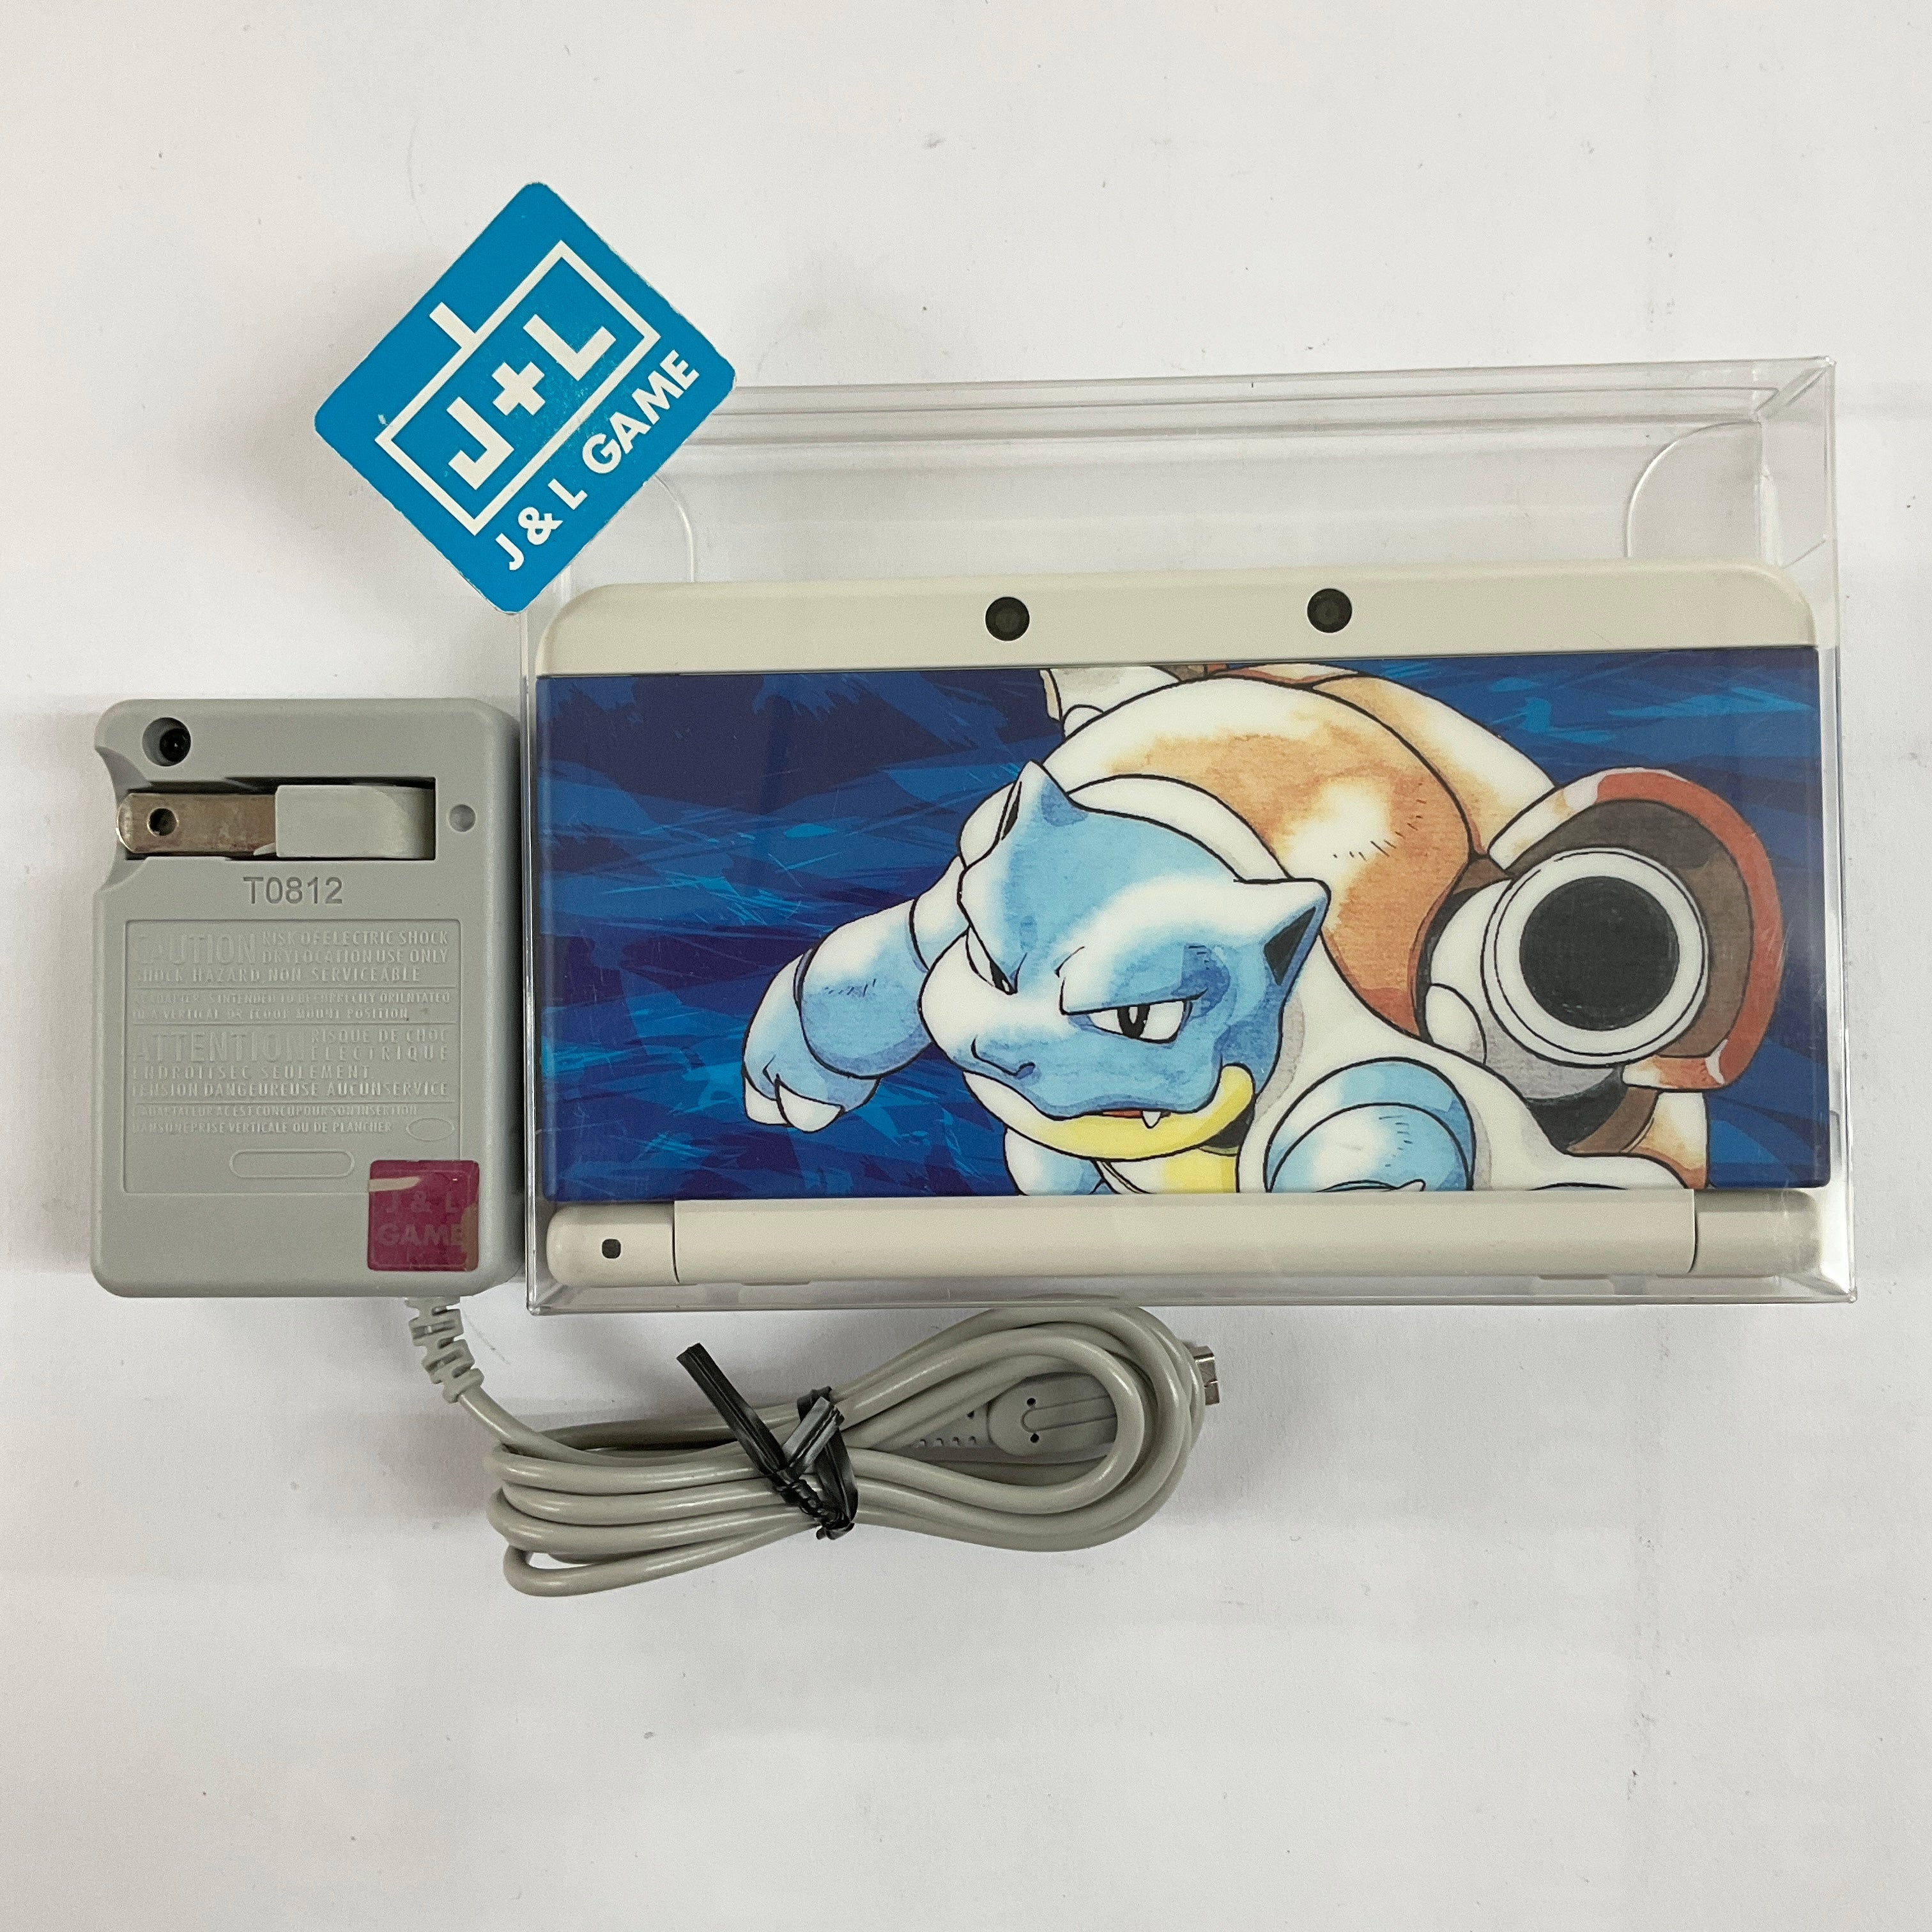 Nintendo New 3DS - Pokemon 20th Anniversary Edition Cover Plates (Blastoise) - Nintendo 3DS [Pre-Owned] Consoles Nintendo   